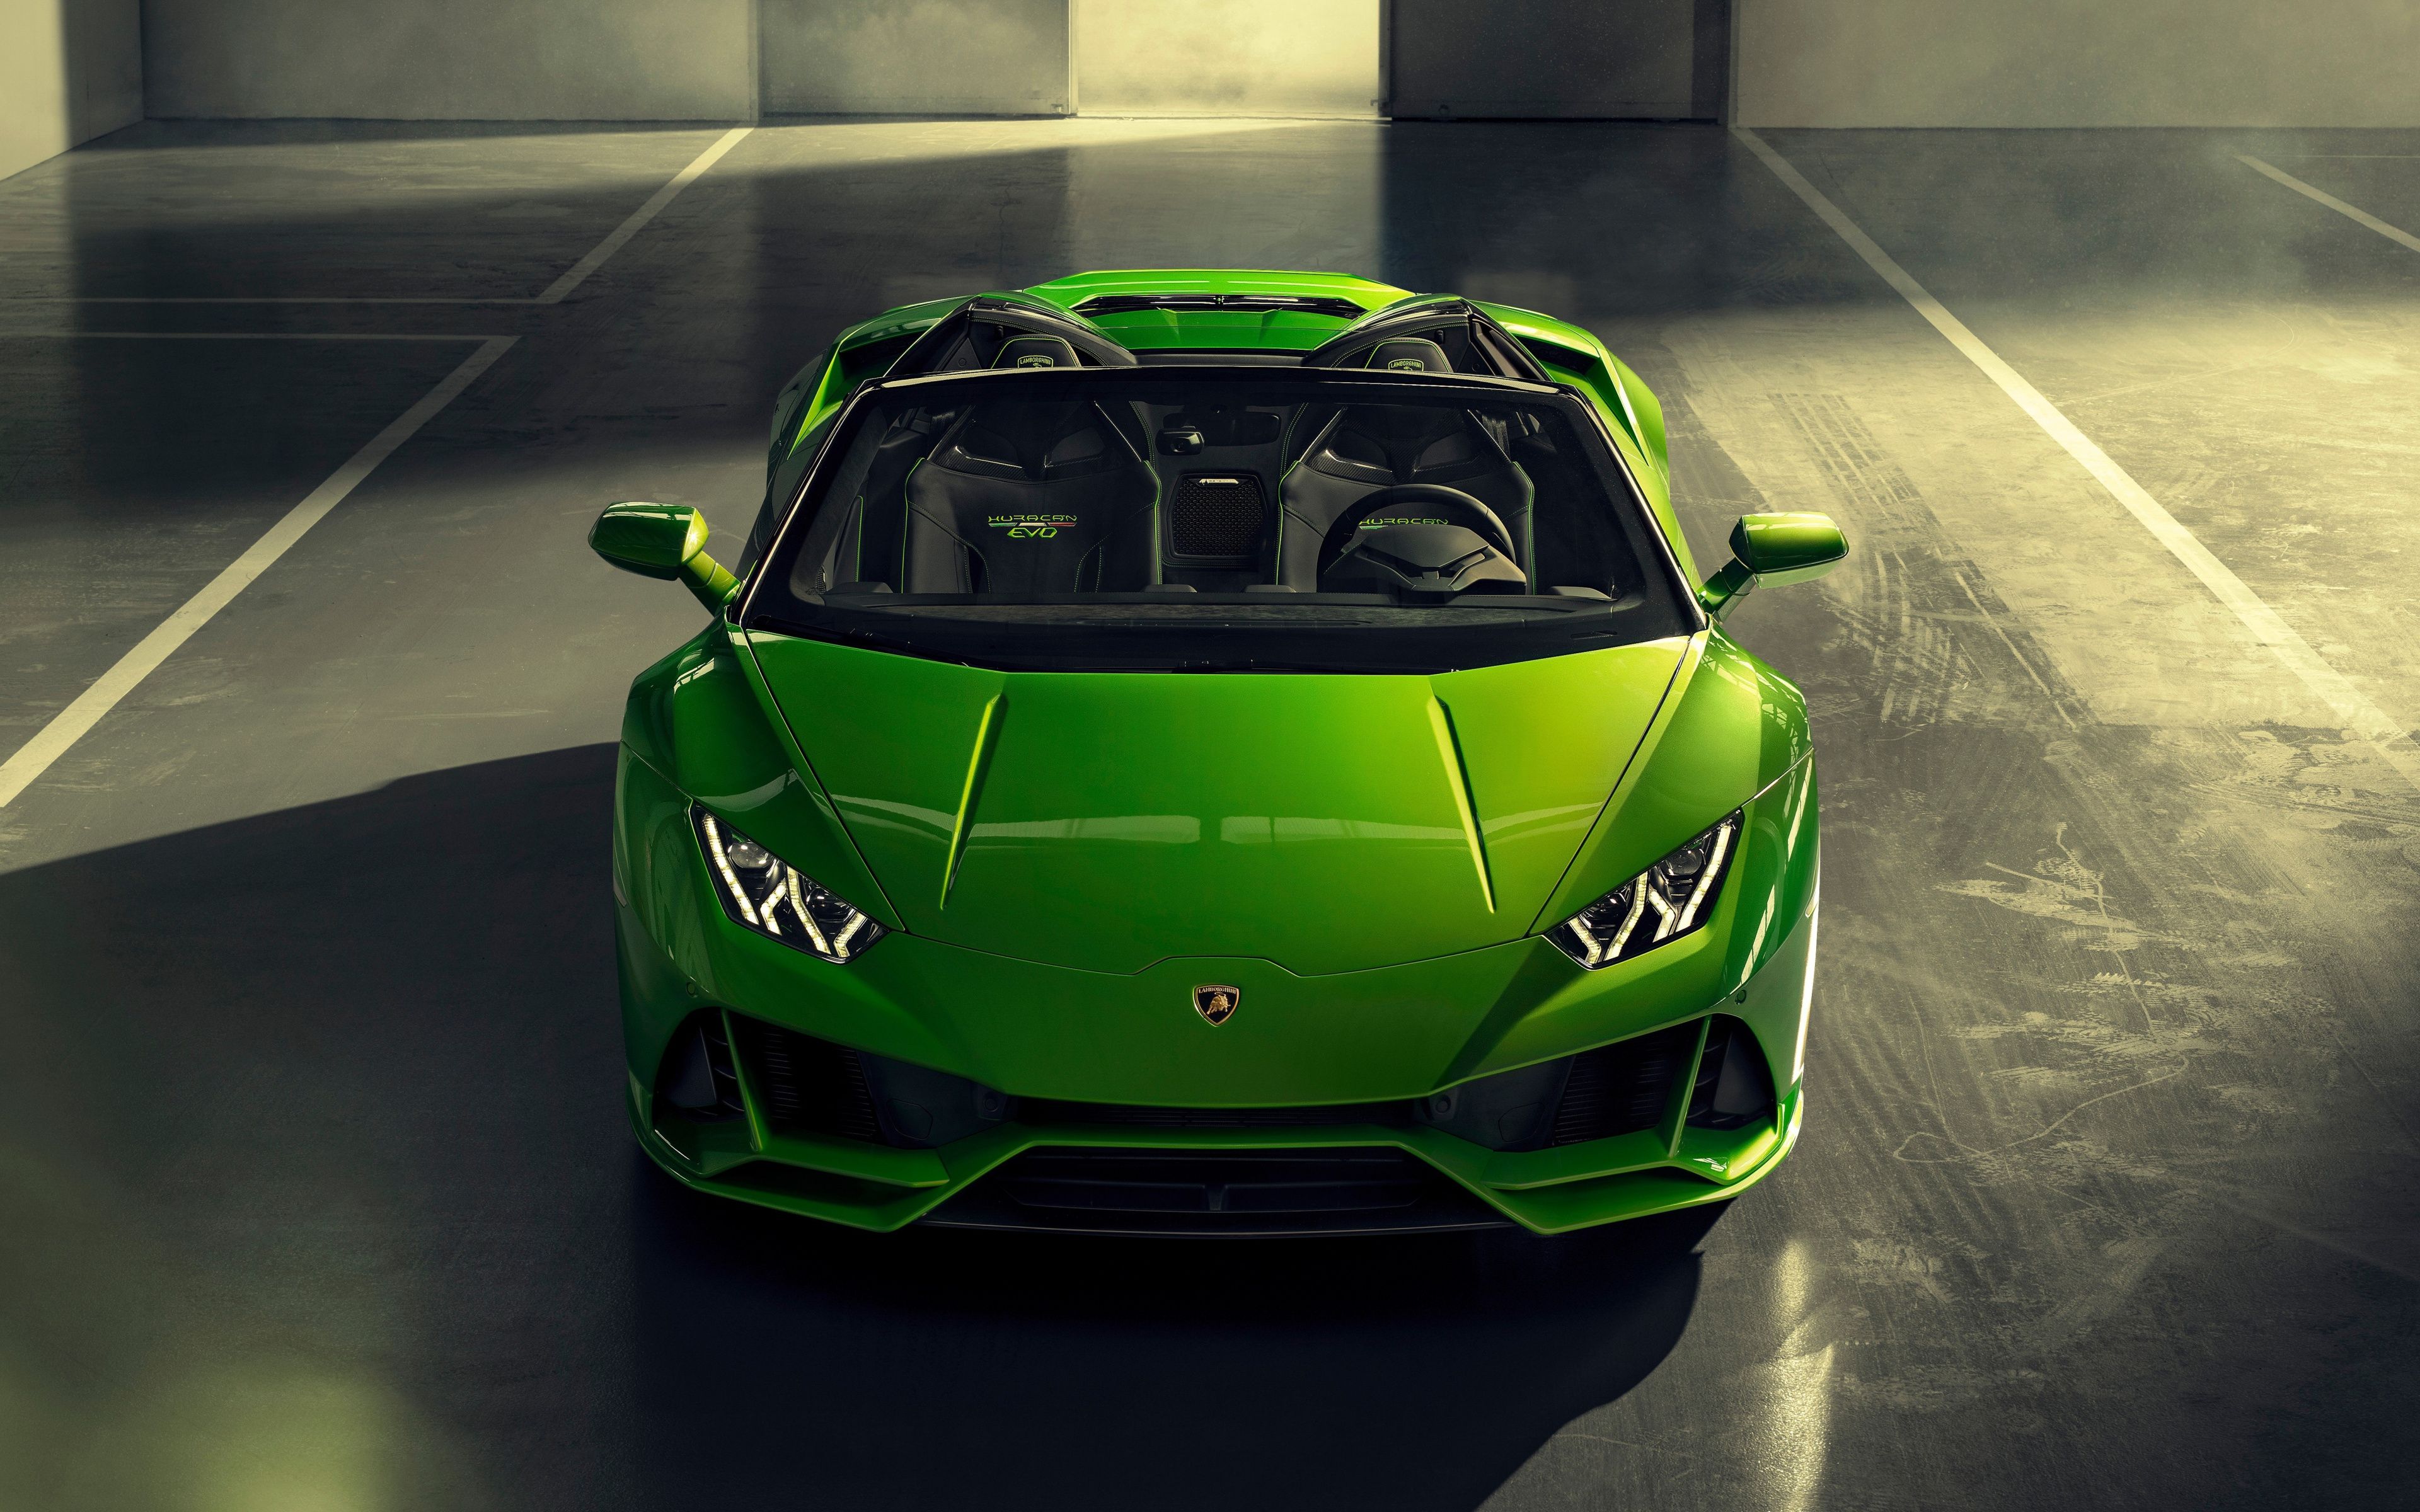 Download Convertible car, green, Lamborghini Huracan wallpaper, 3840x 4K Ultra HD 16: Widescreen